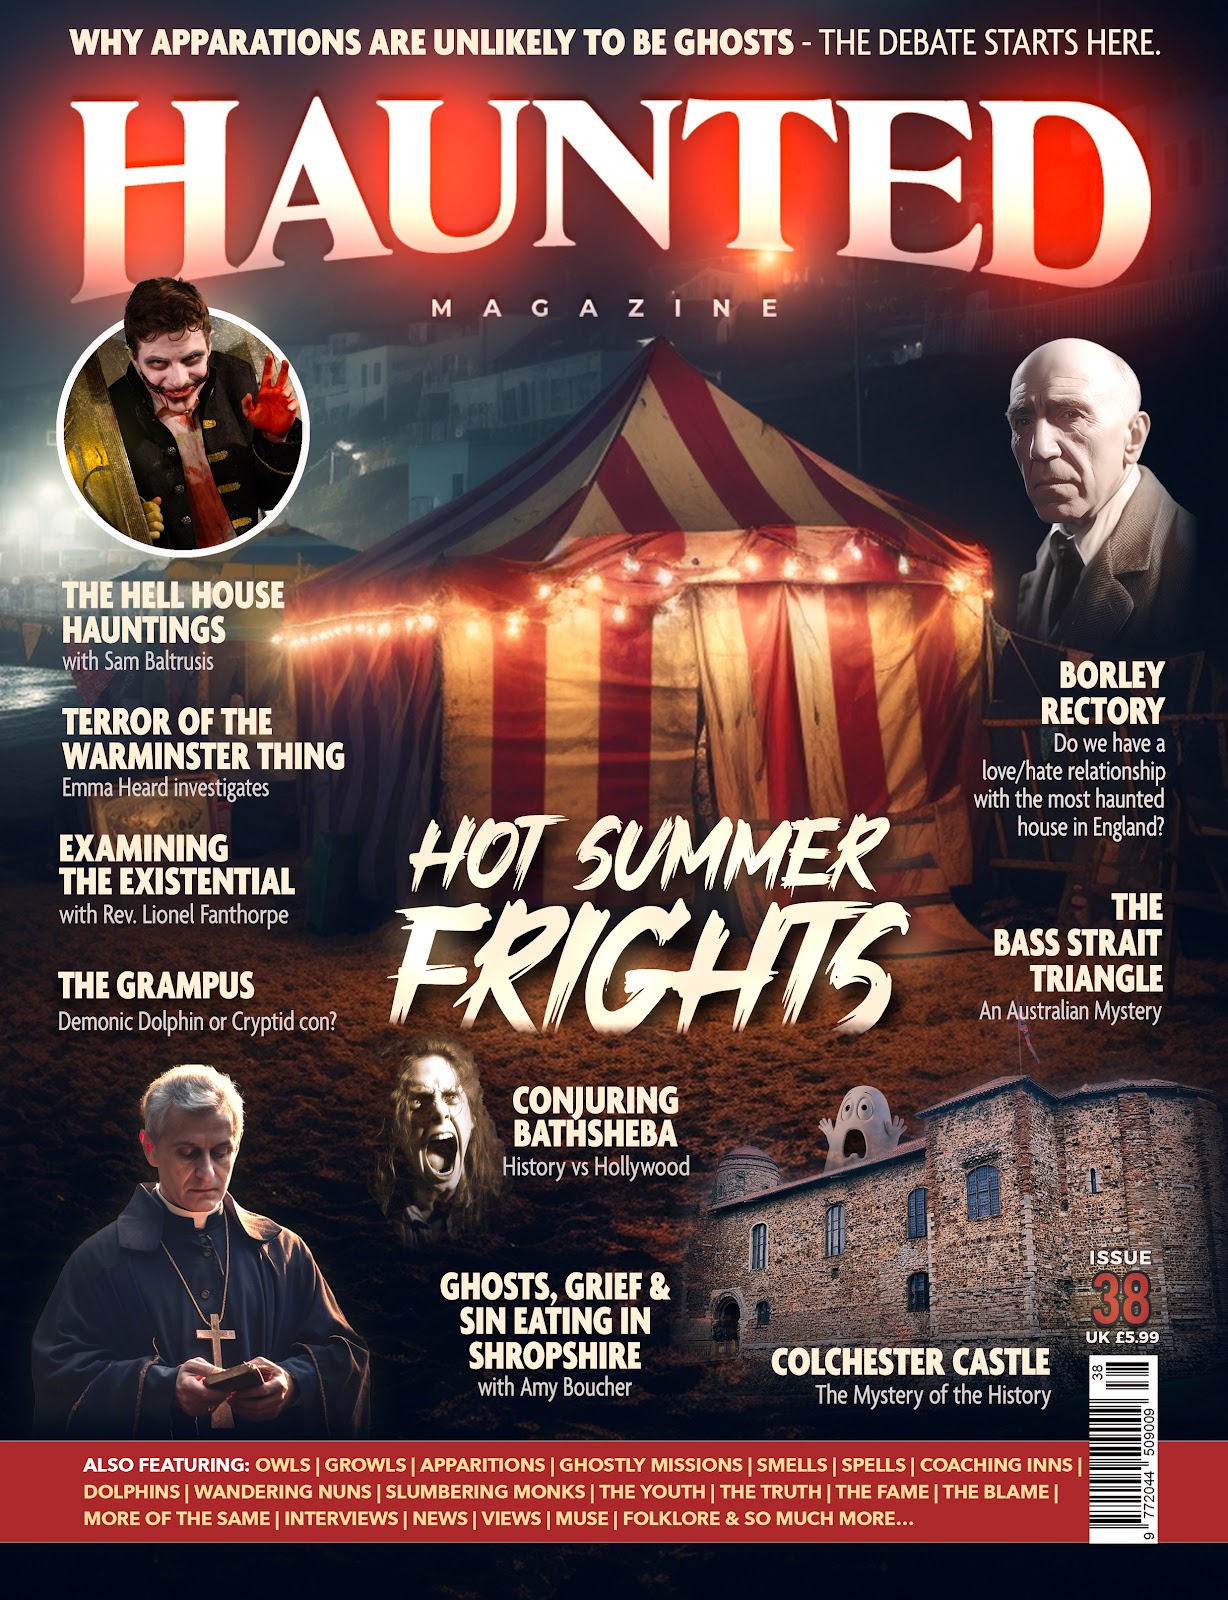 Haunted Magazine Issue 38